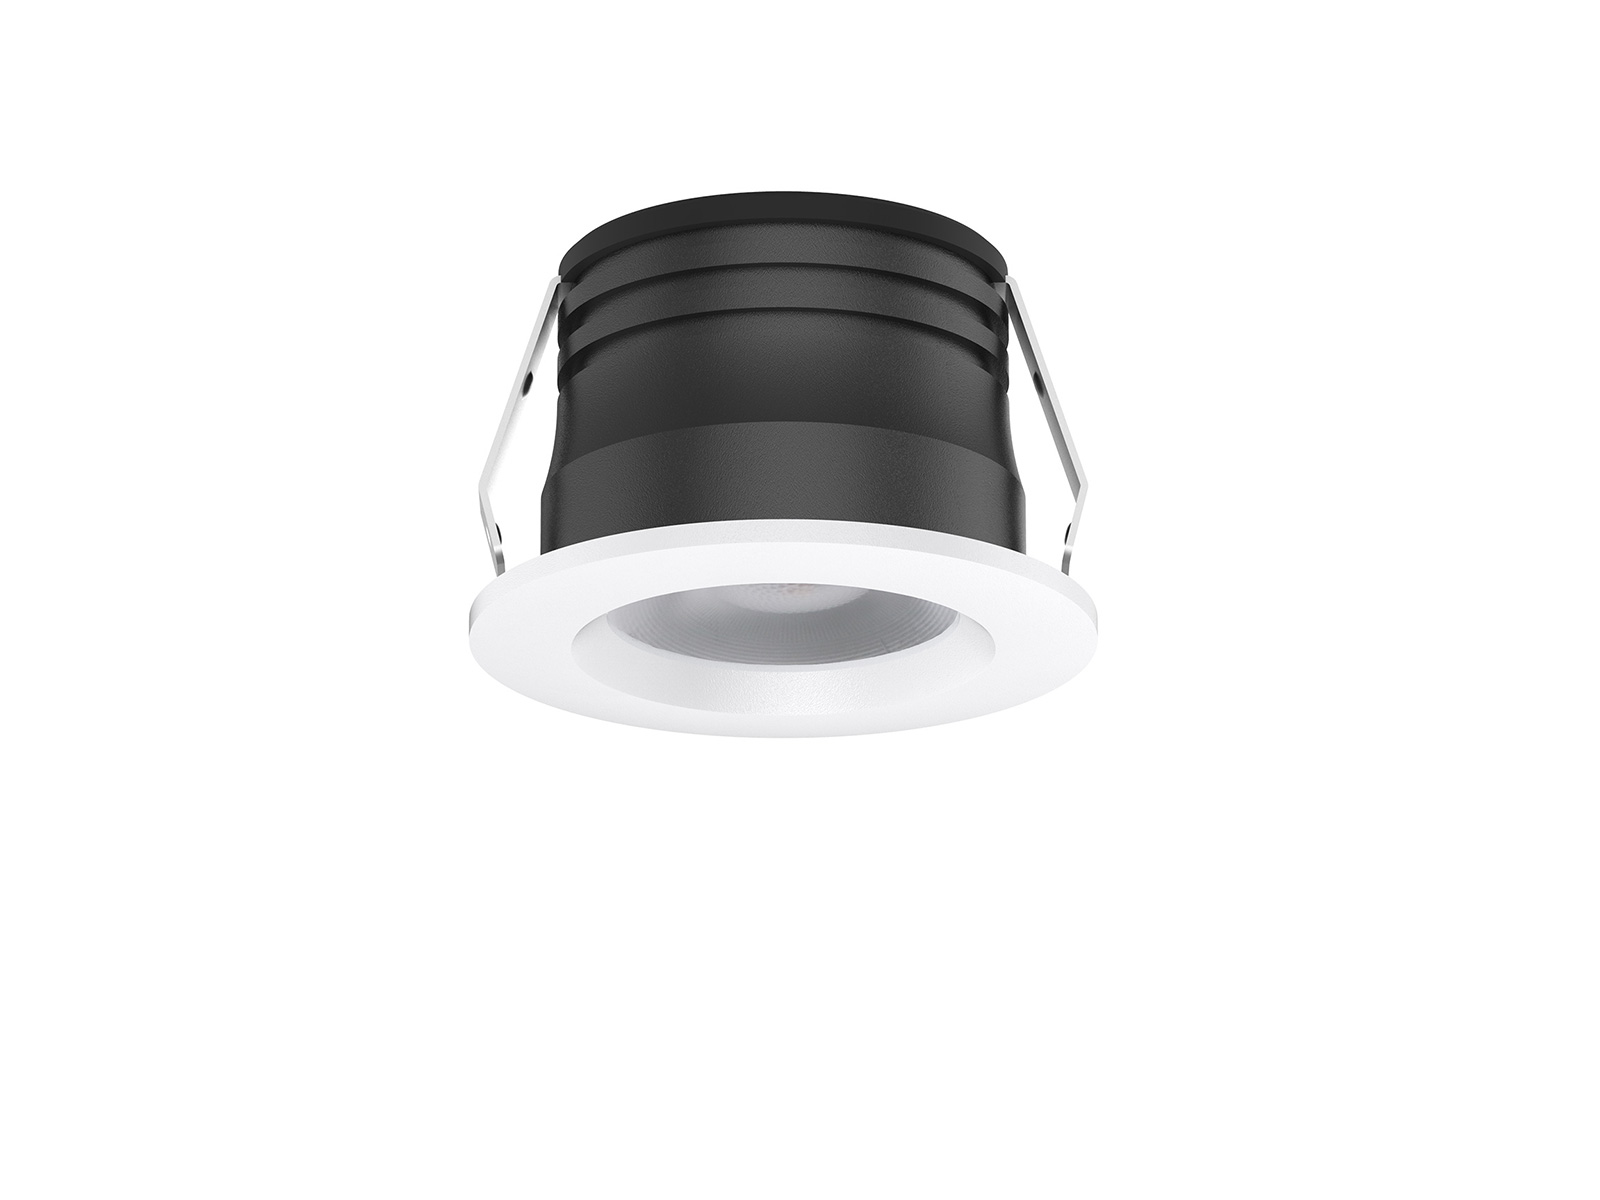 DL278 Mini and Exquisite LED Spot Light